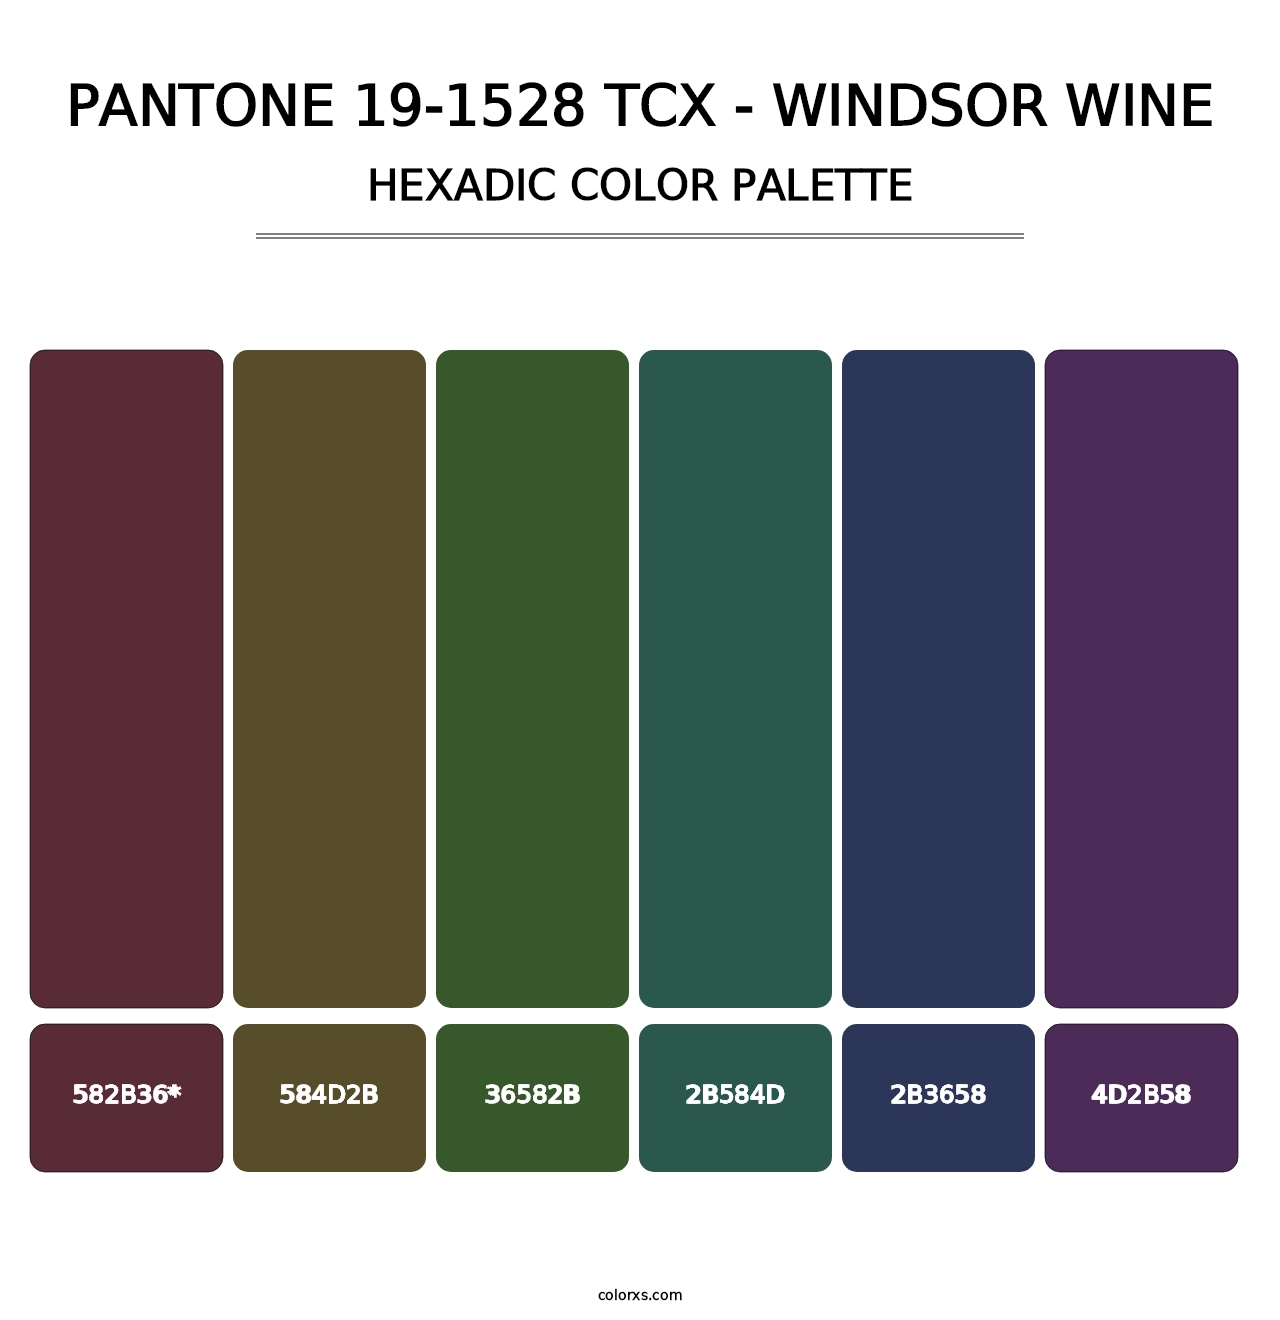 PANTONE 19-1528 TCX - Windsor Wine - Hexadic Color Palette